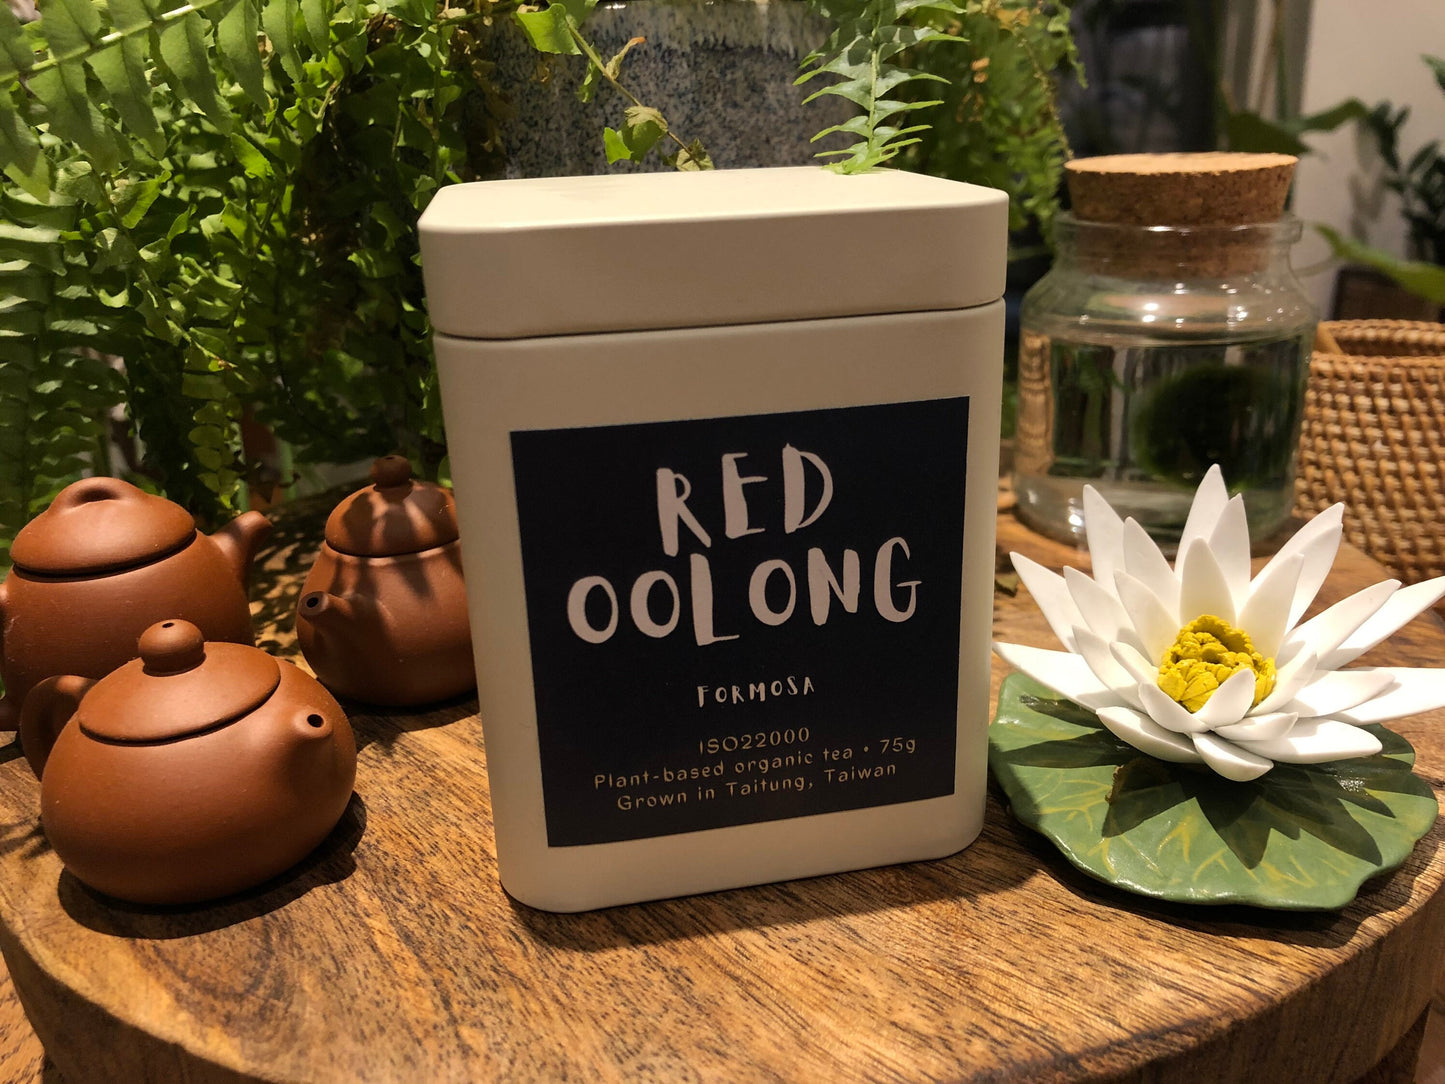 Gohobi Premium Red Oolong Tea Top quality ISO22000 Organic plant-based Tea farm Direct sourcing Taiwan tea bag loose leaf tea box Bao zhong